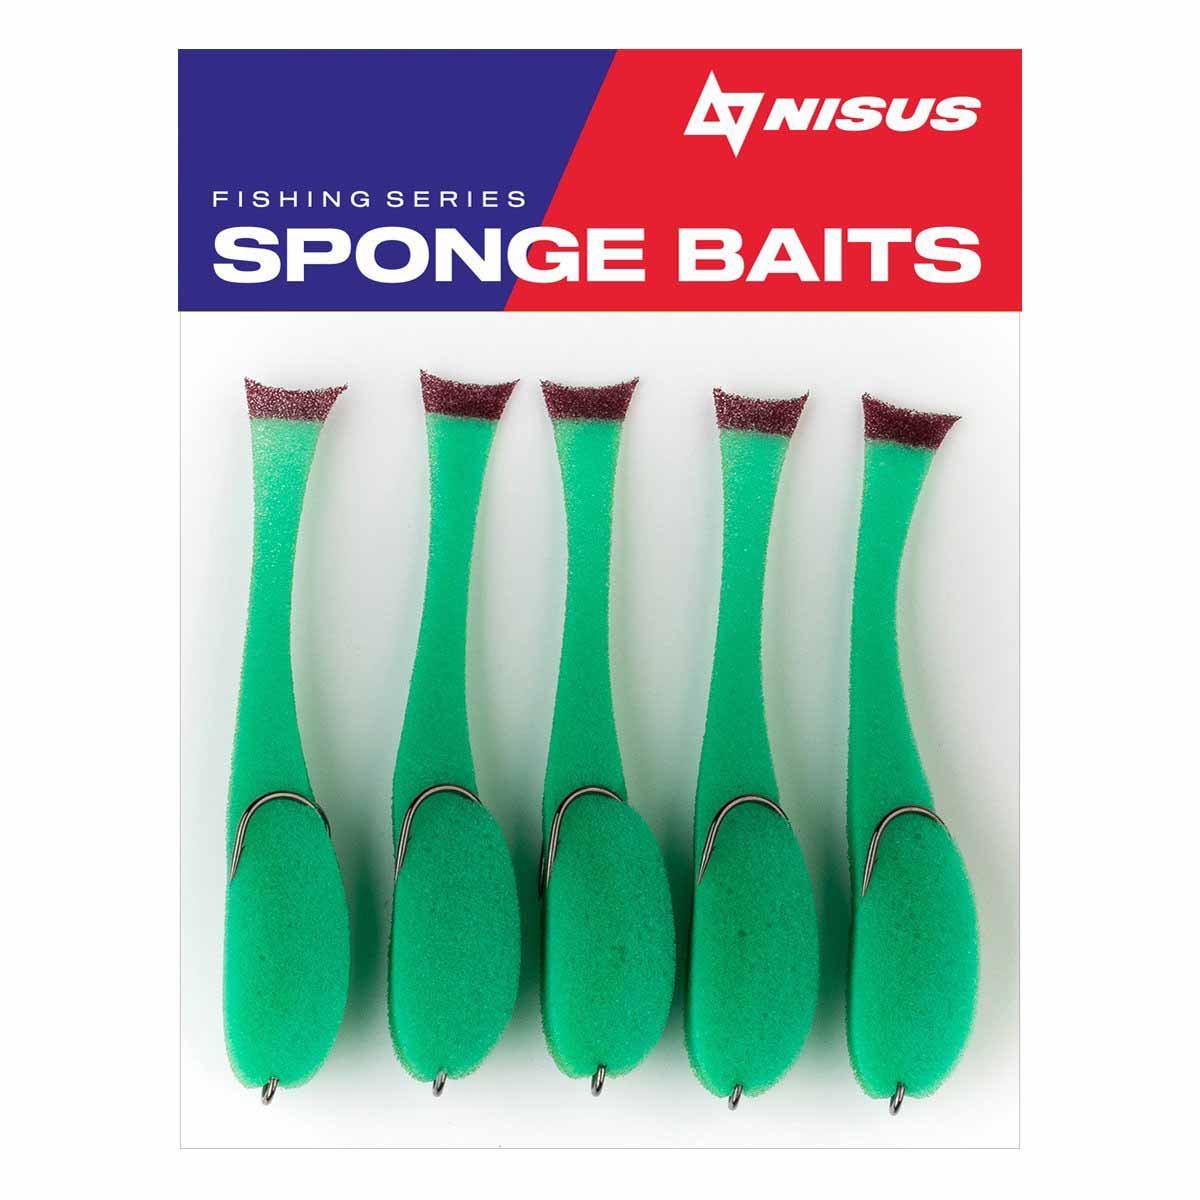 Nisus 2.5 inch Sponge Bait Fishing Lure, Pack of 5